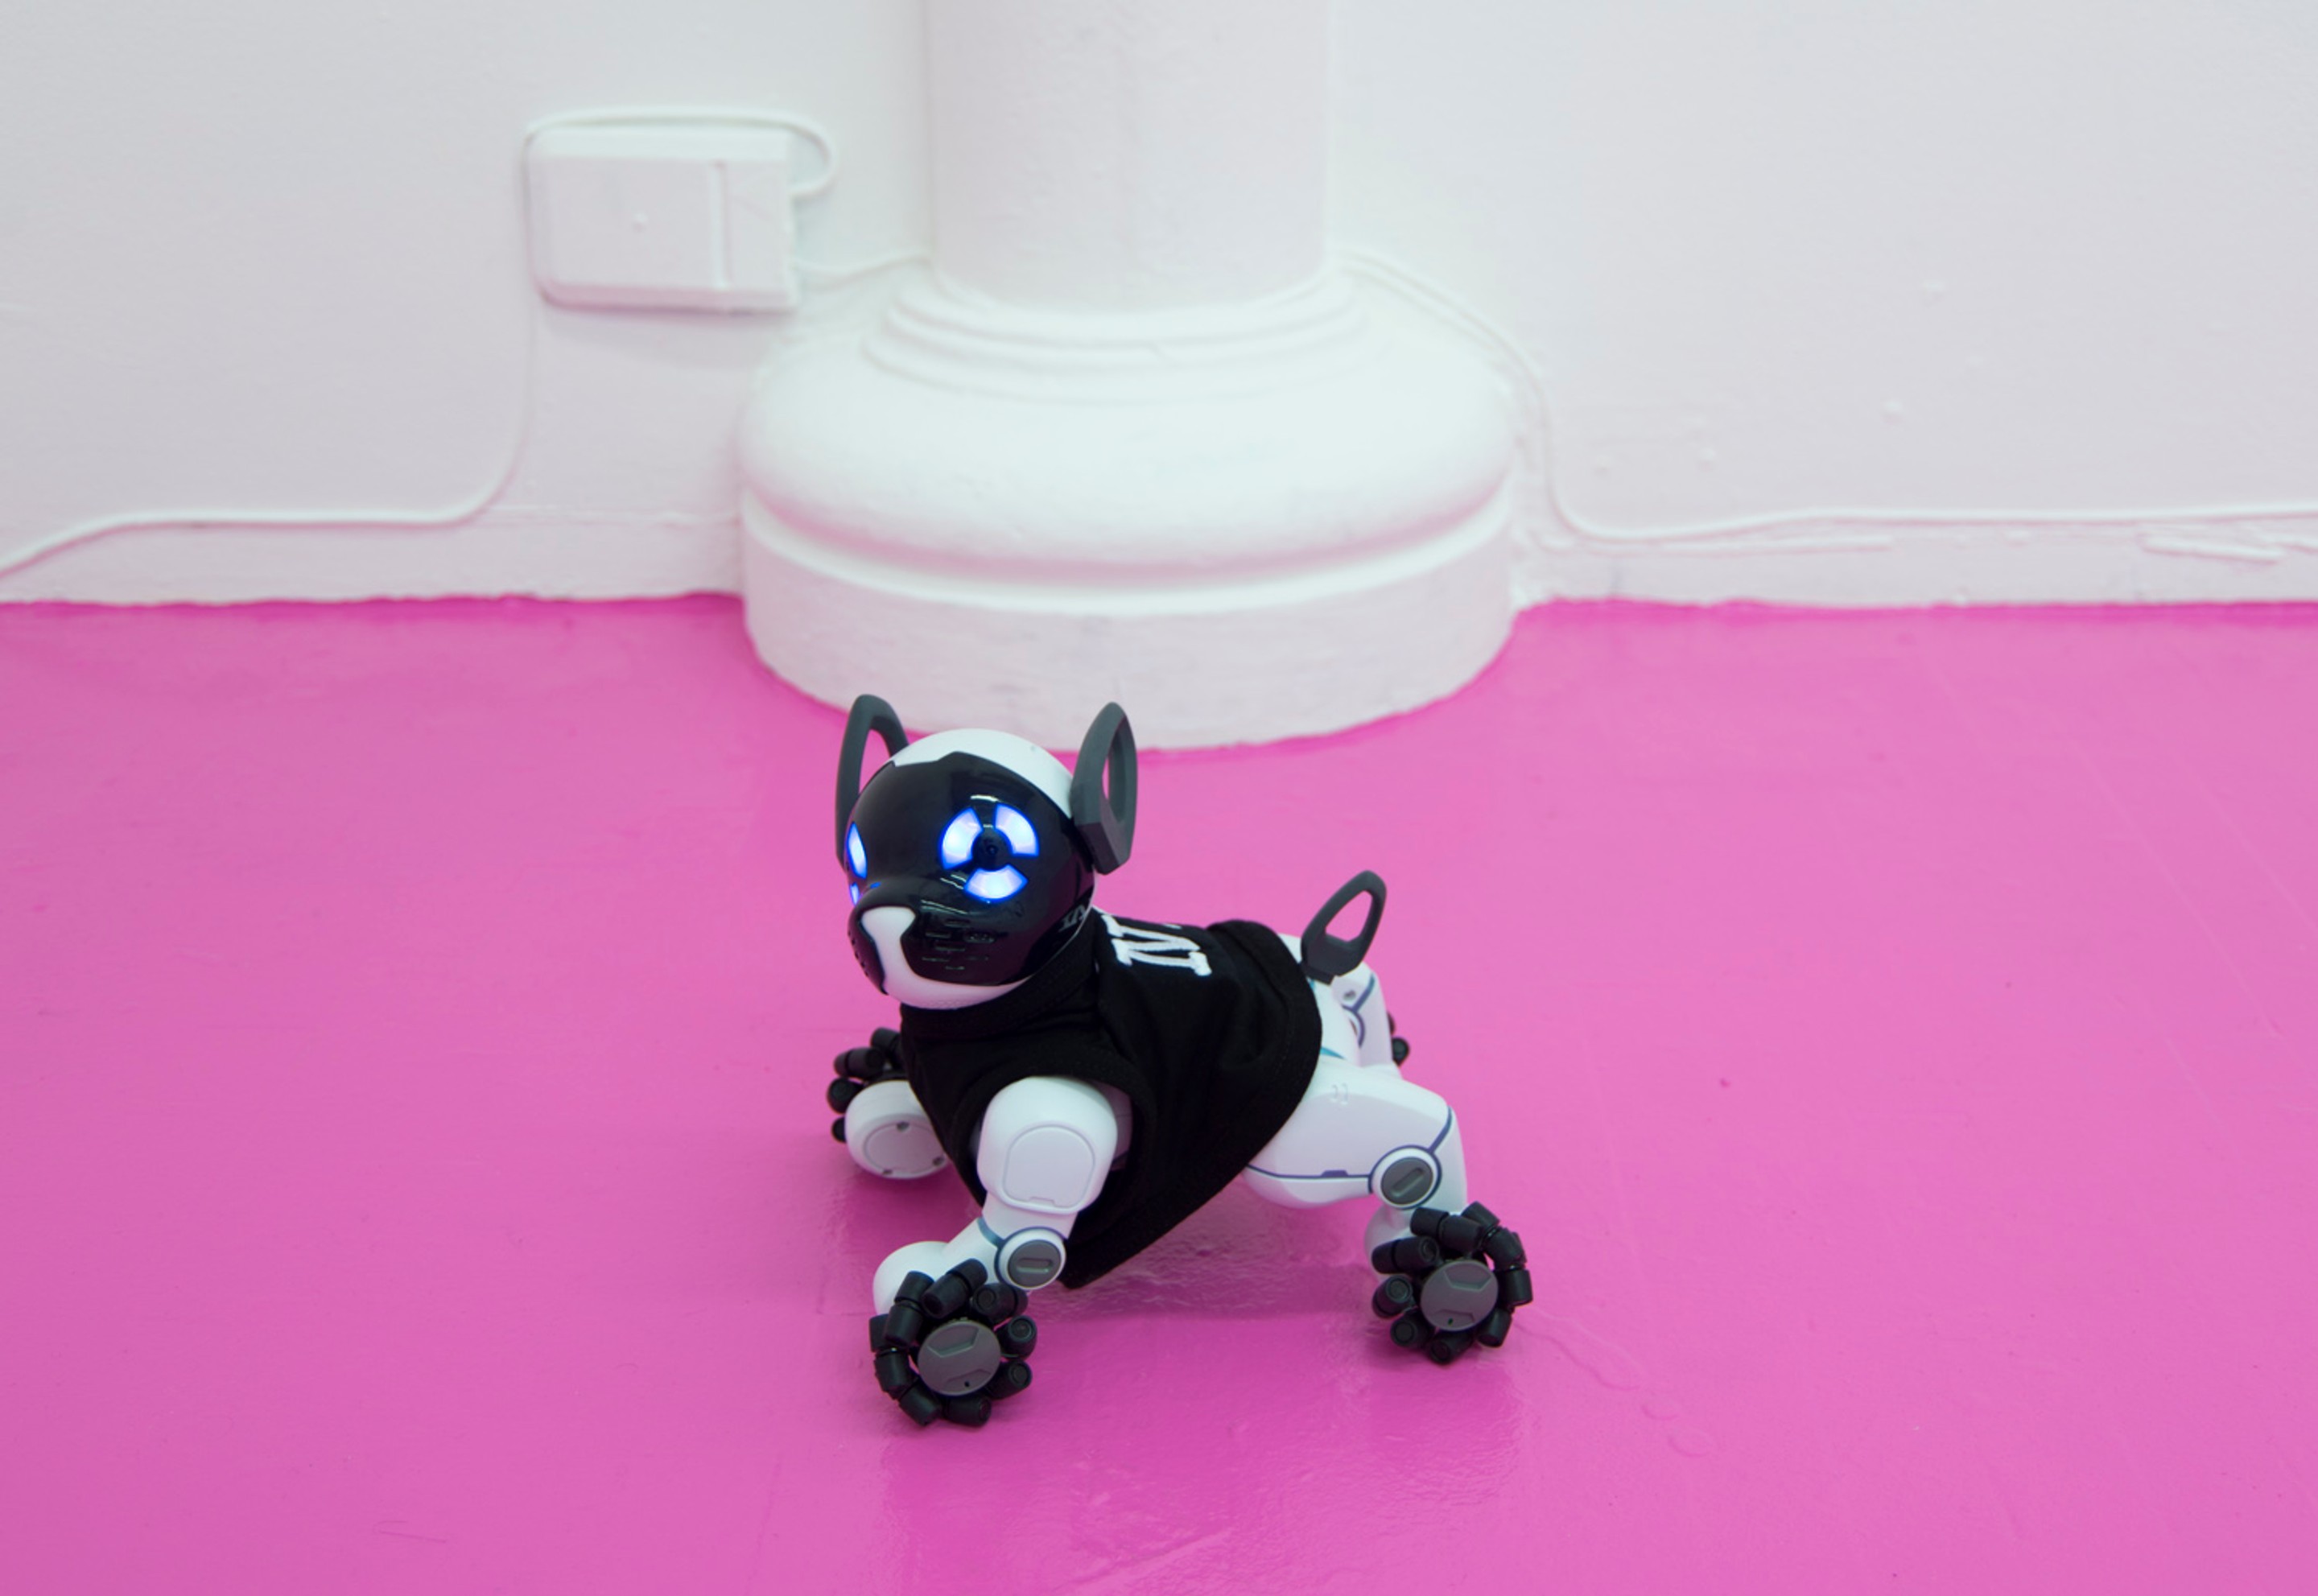 åyr
Michelangelo (2017). WowWee CHiP Robot Dog White, “I ❤️️ NY” tiny pet t-shirt

åyr
Schiaparelli Pink Triangle (Heartbreaker Pink R3410) (2017). Acrylic floor paint, color gel